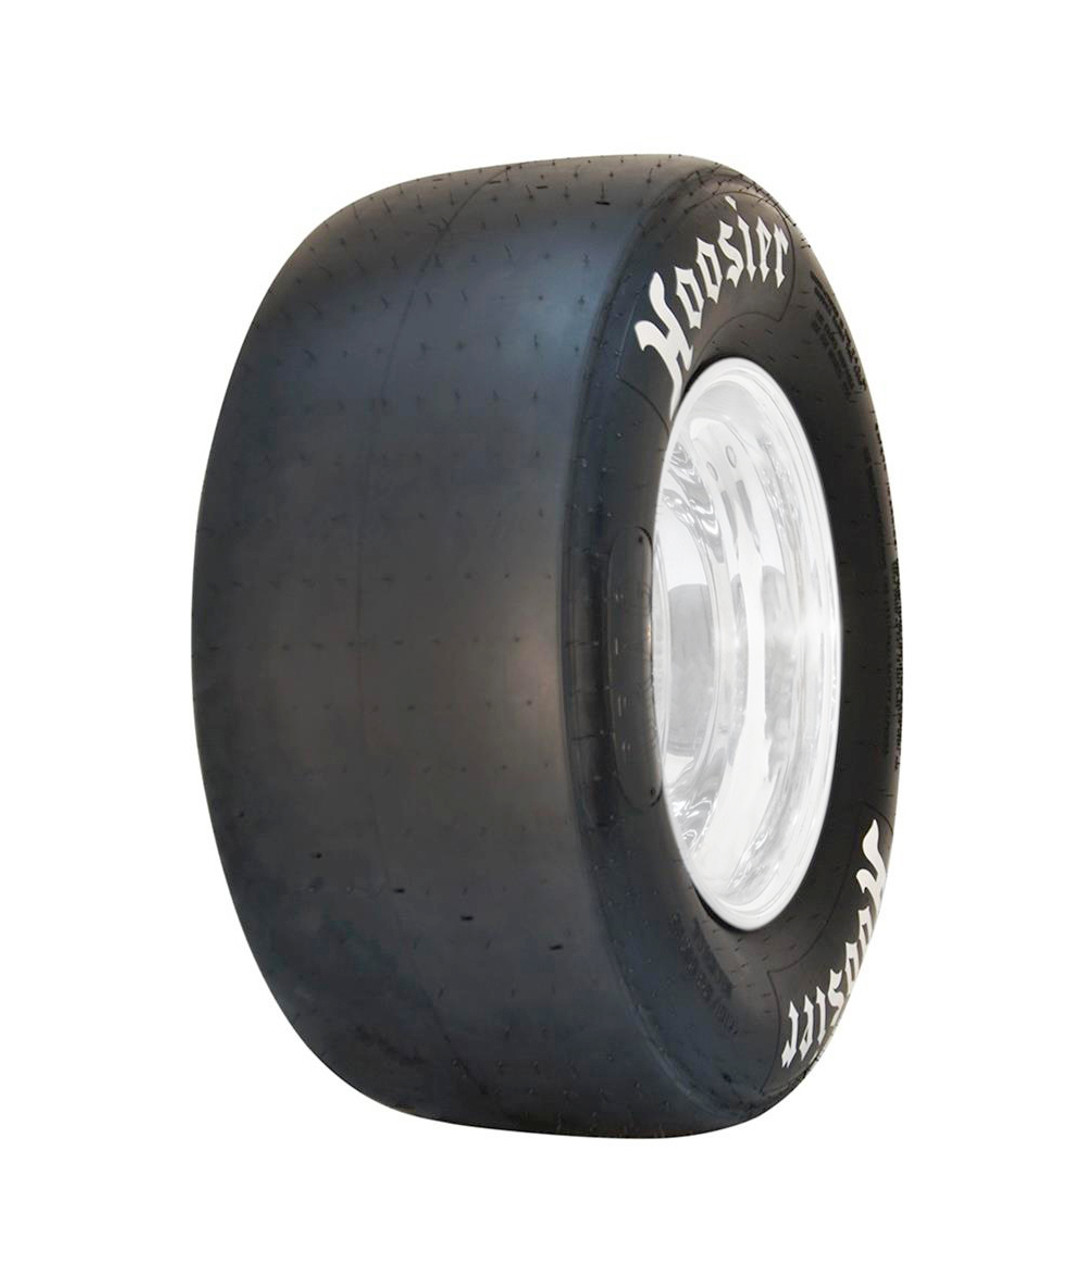 26.0/10.0R-15 Drag Radial Tire